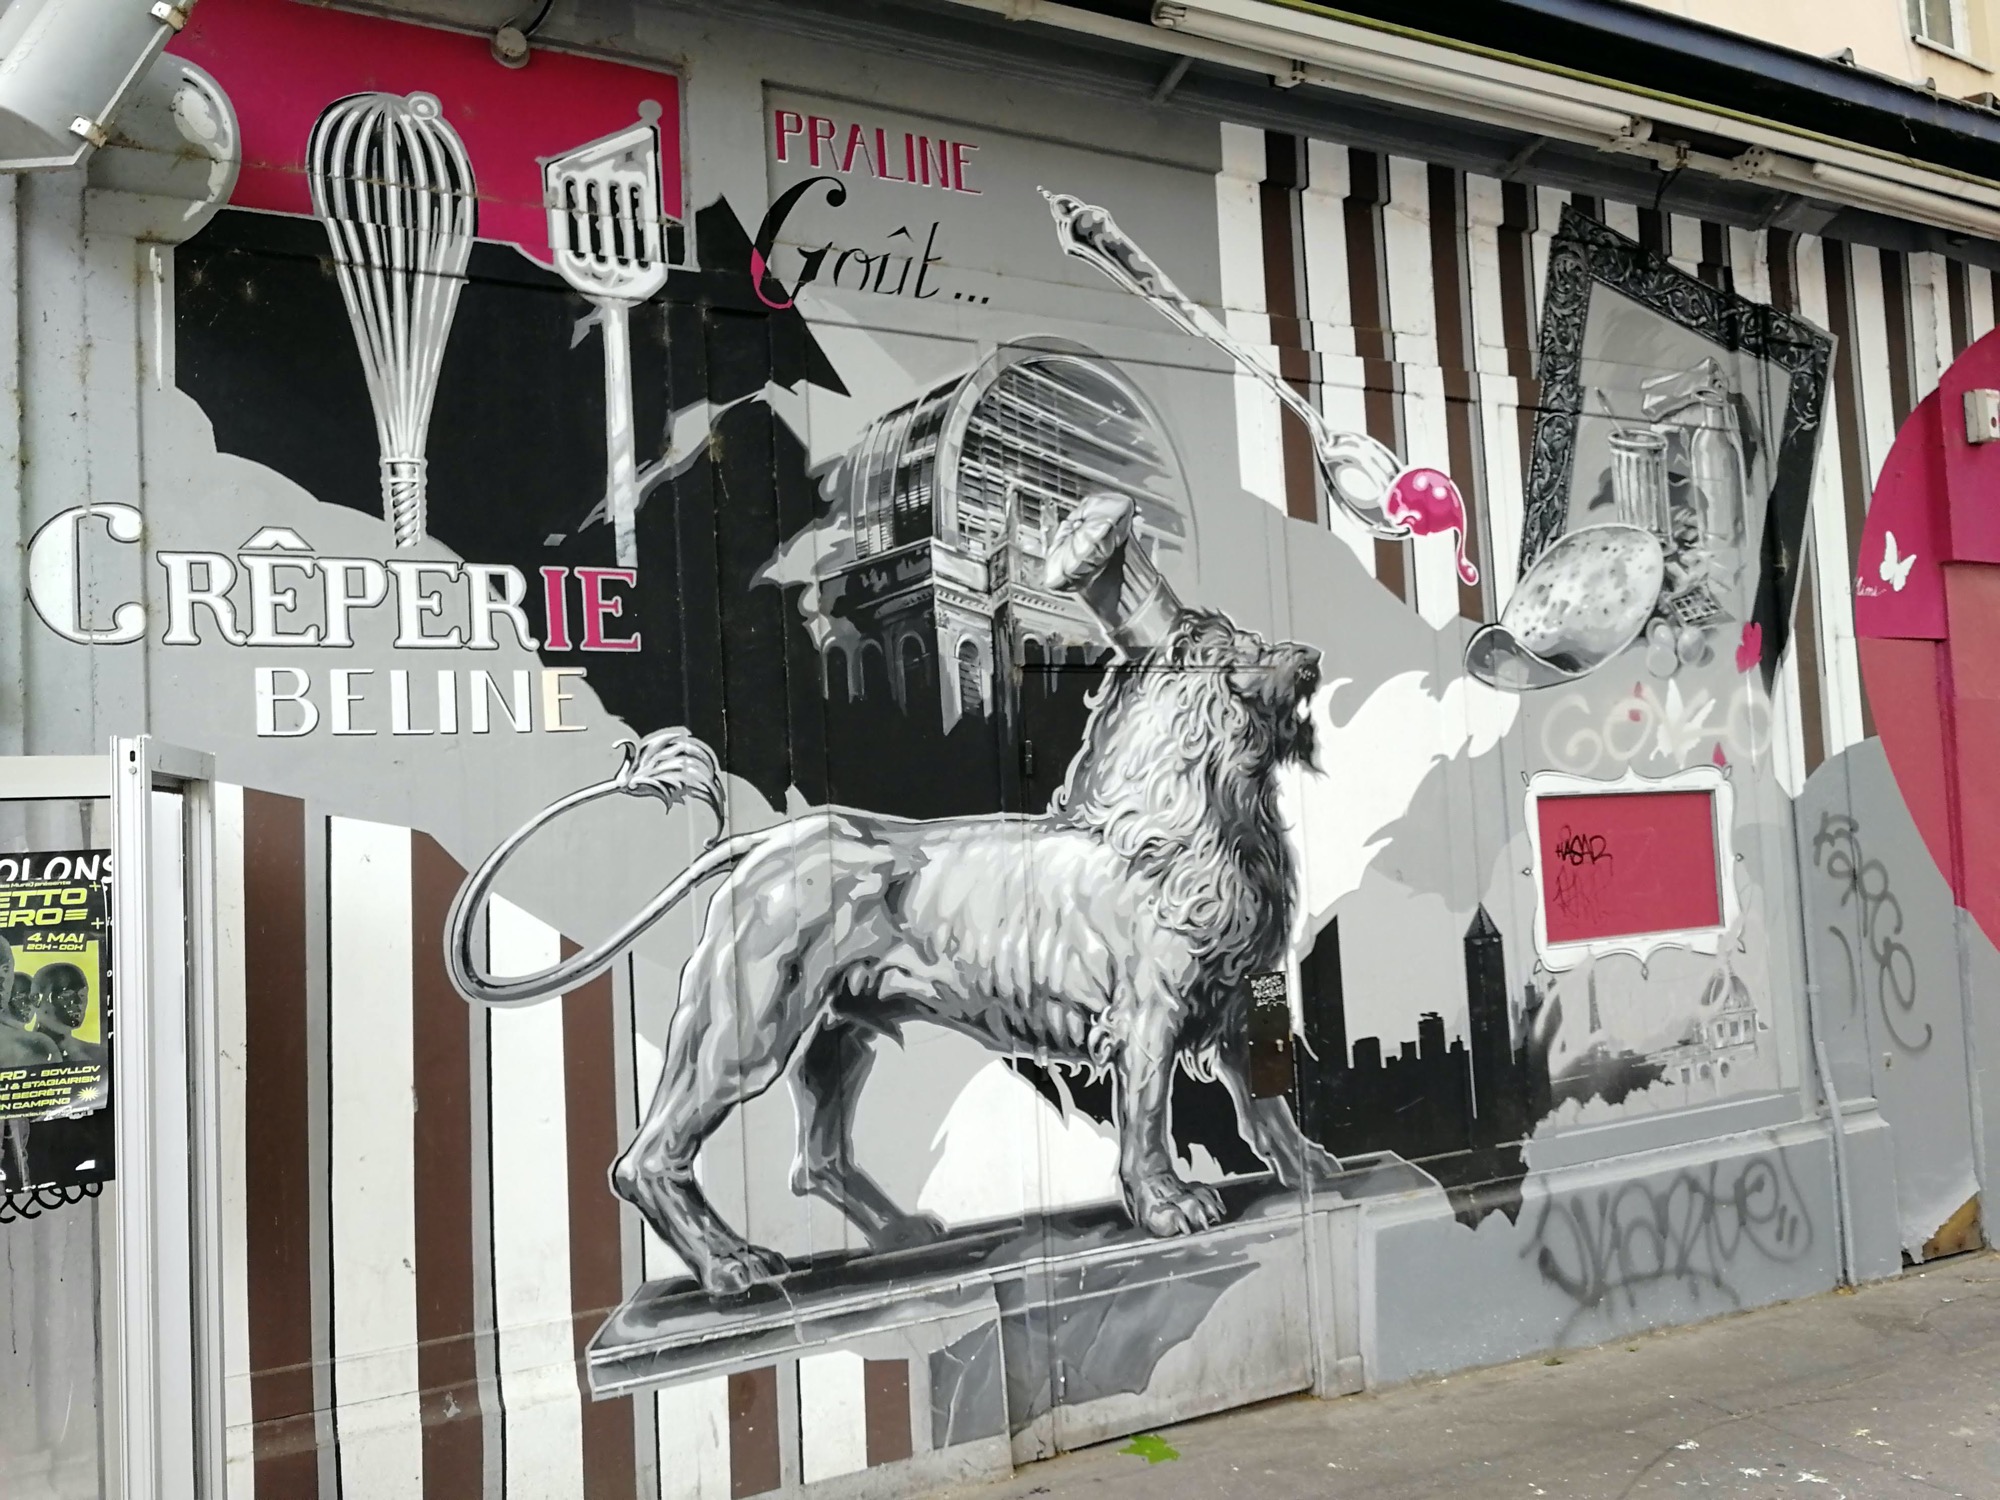 Graffiti 1551 Crêperie beline captured by Rabot in Lyon France